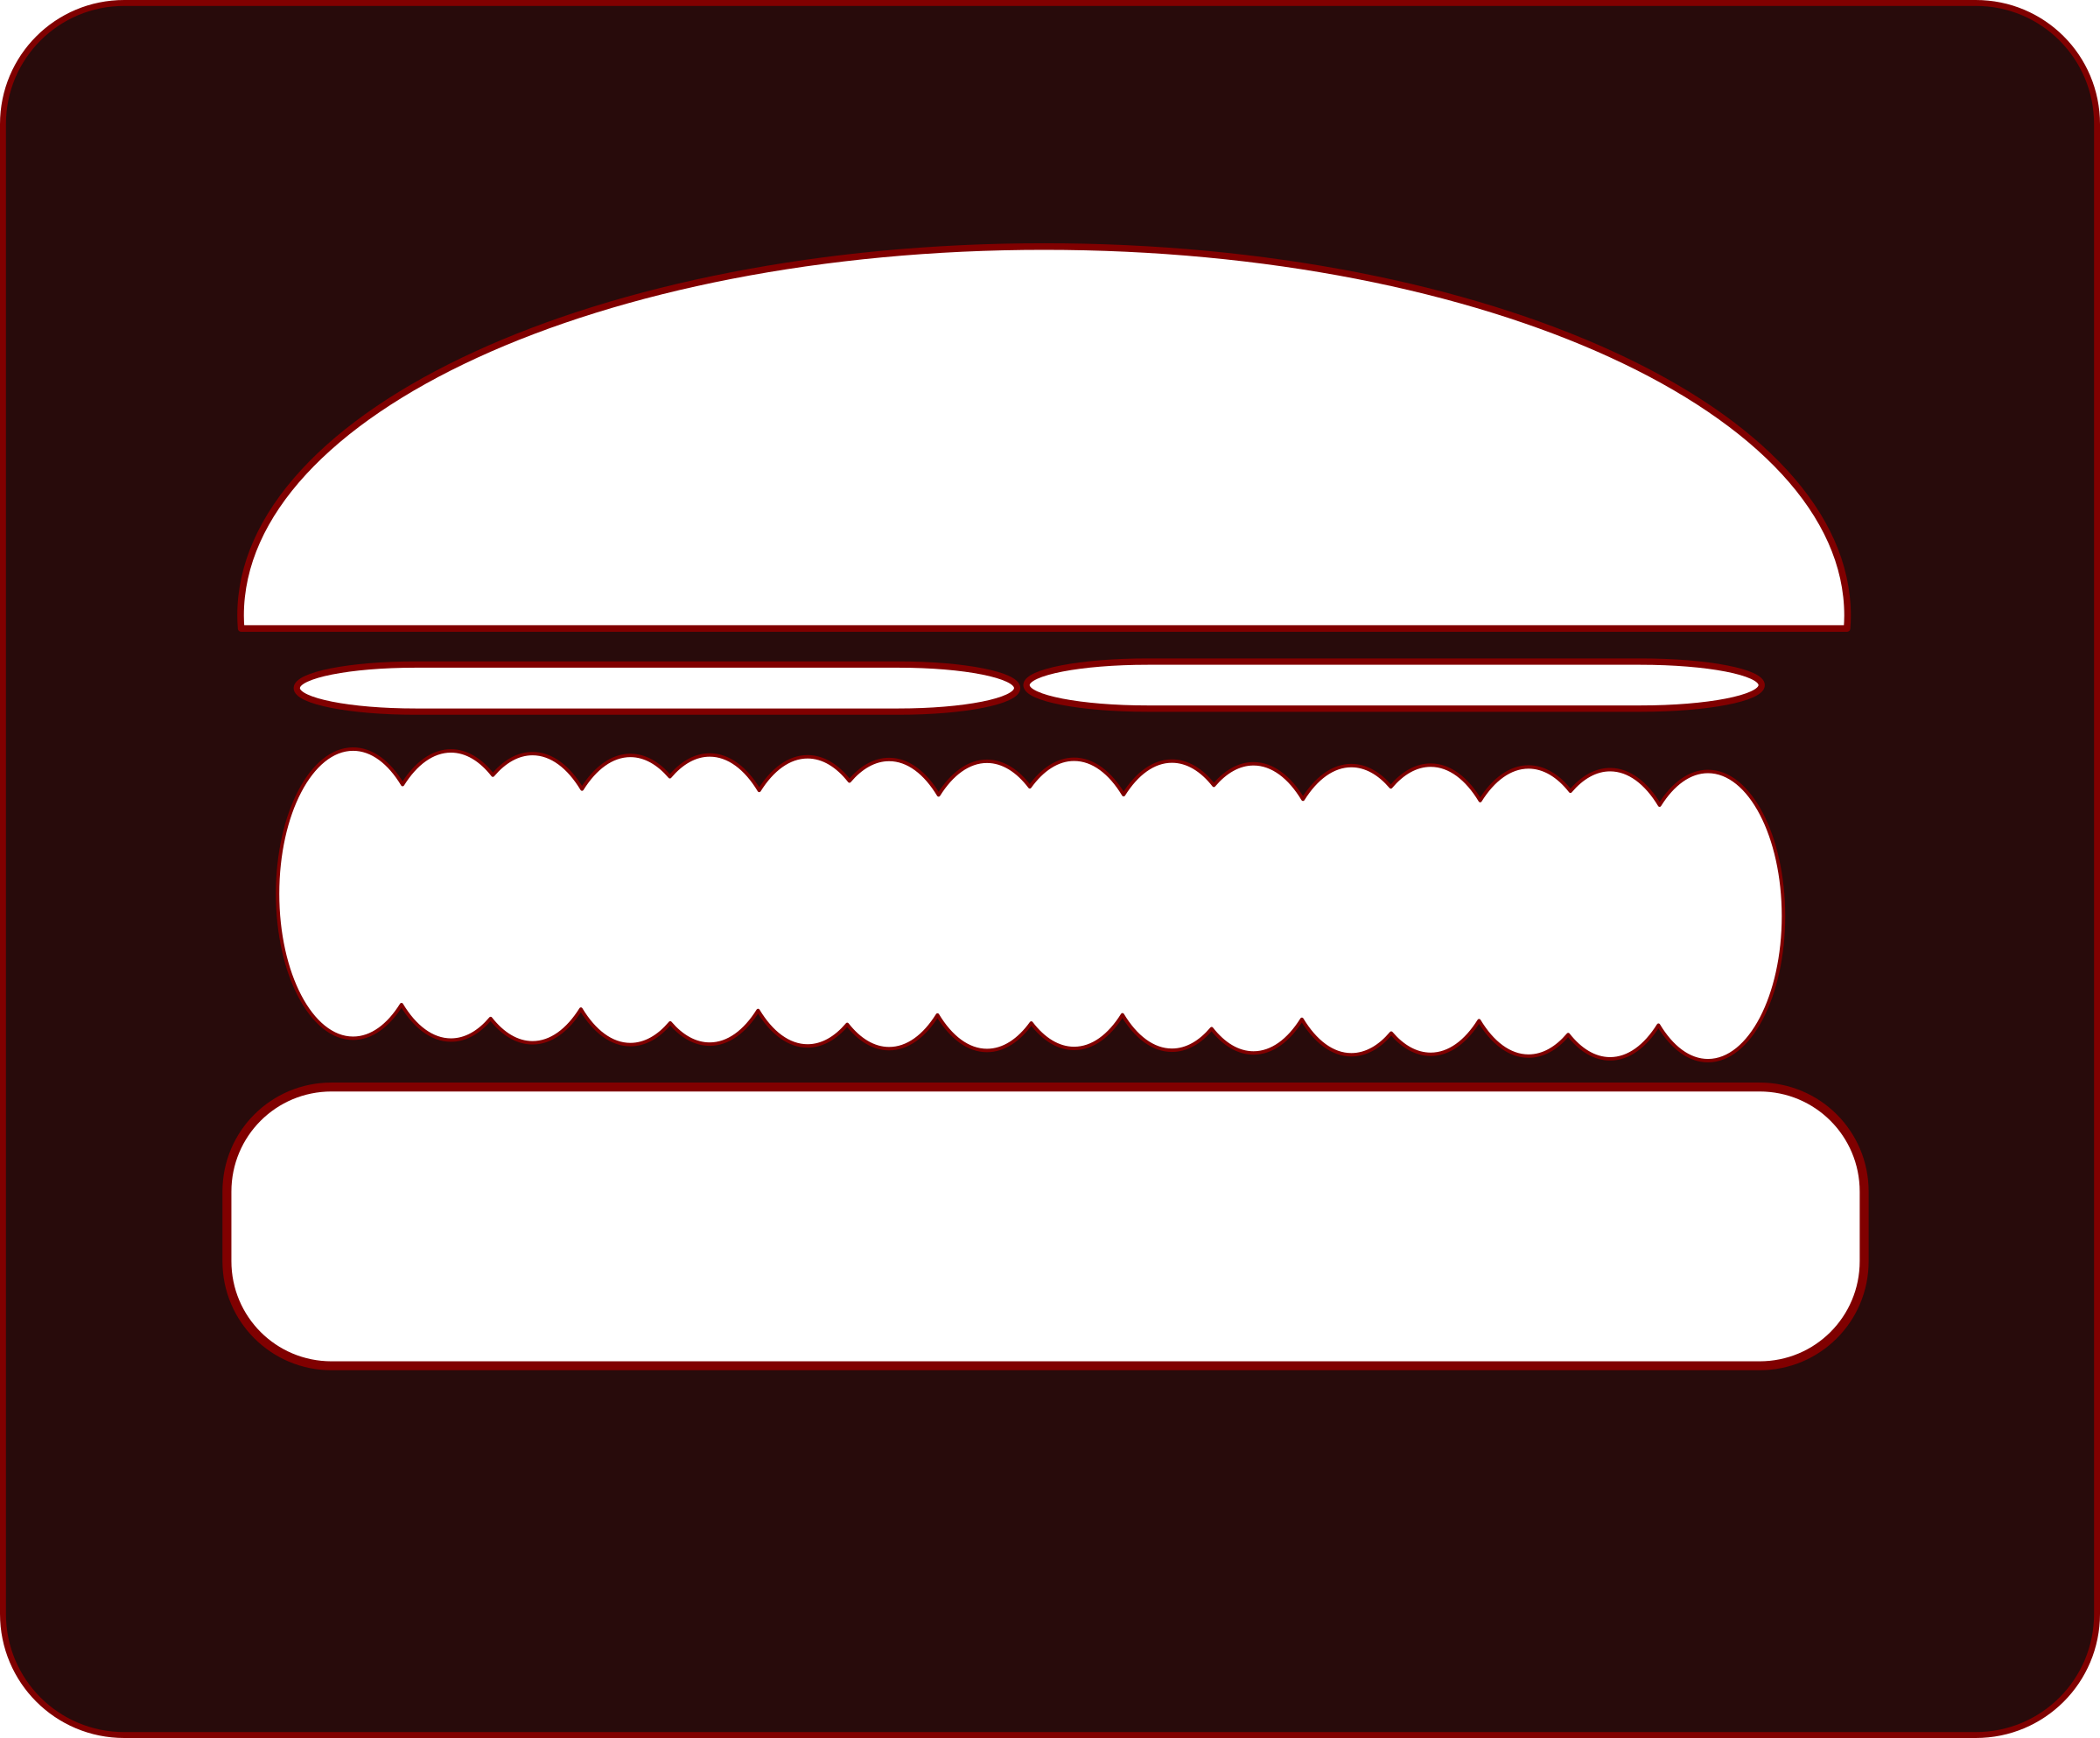 Hamburger at getdrawings com. Burger clipart silhouette